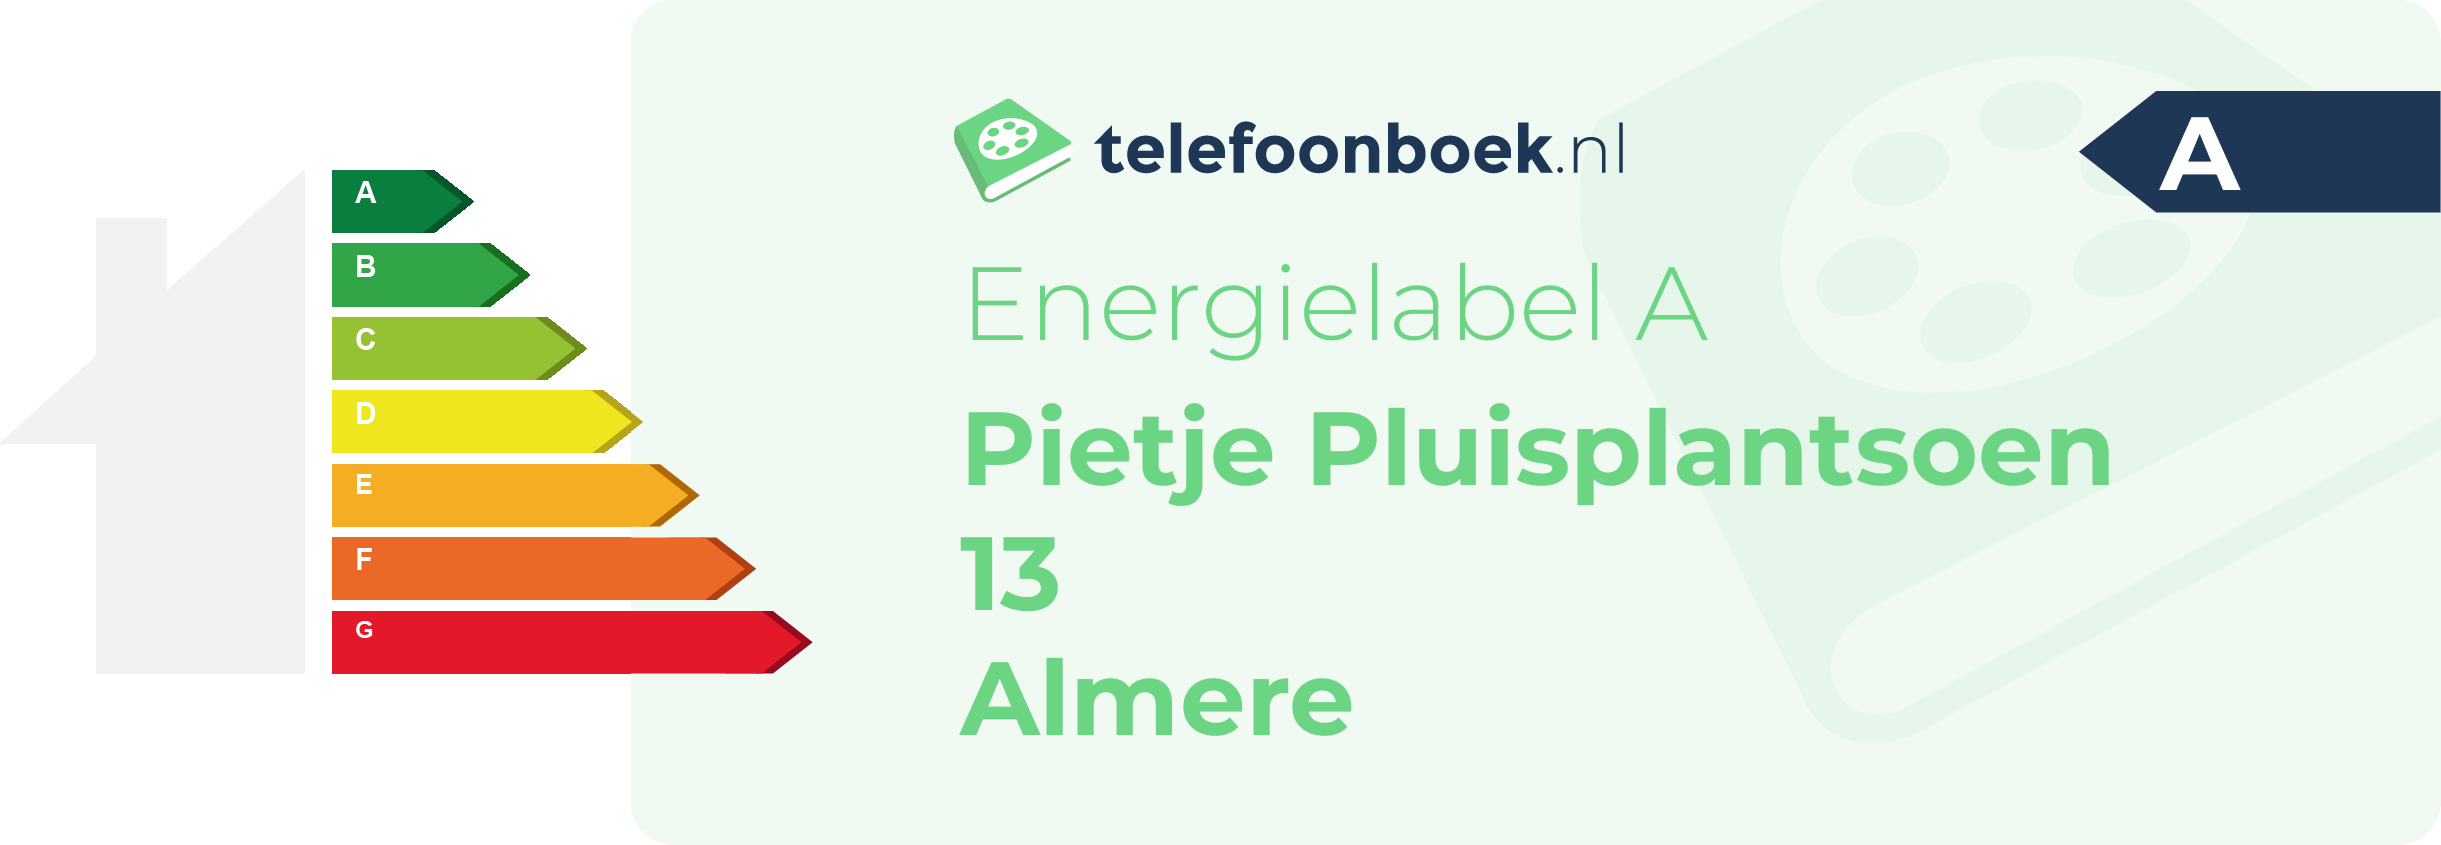 Energielabel Pietje Pluisplantsoen 13 Almere